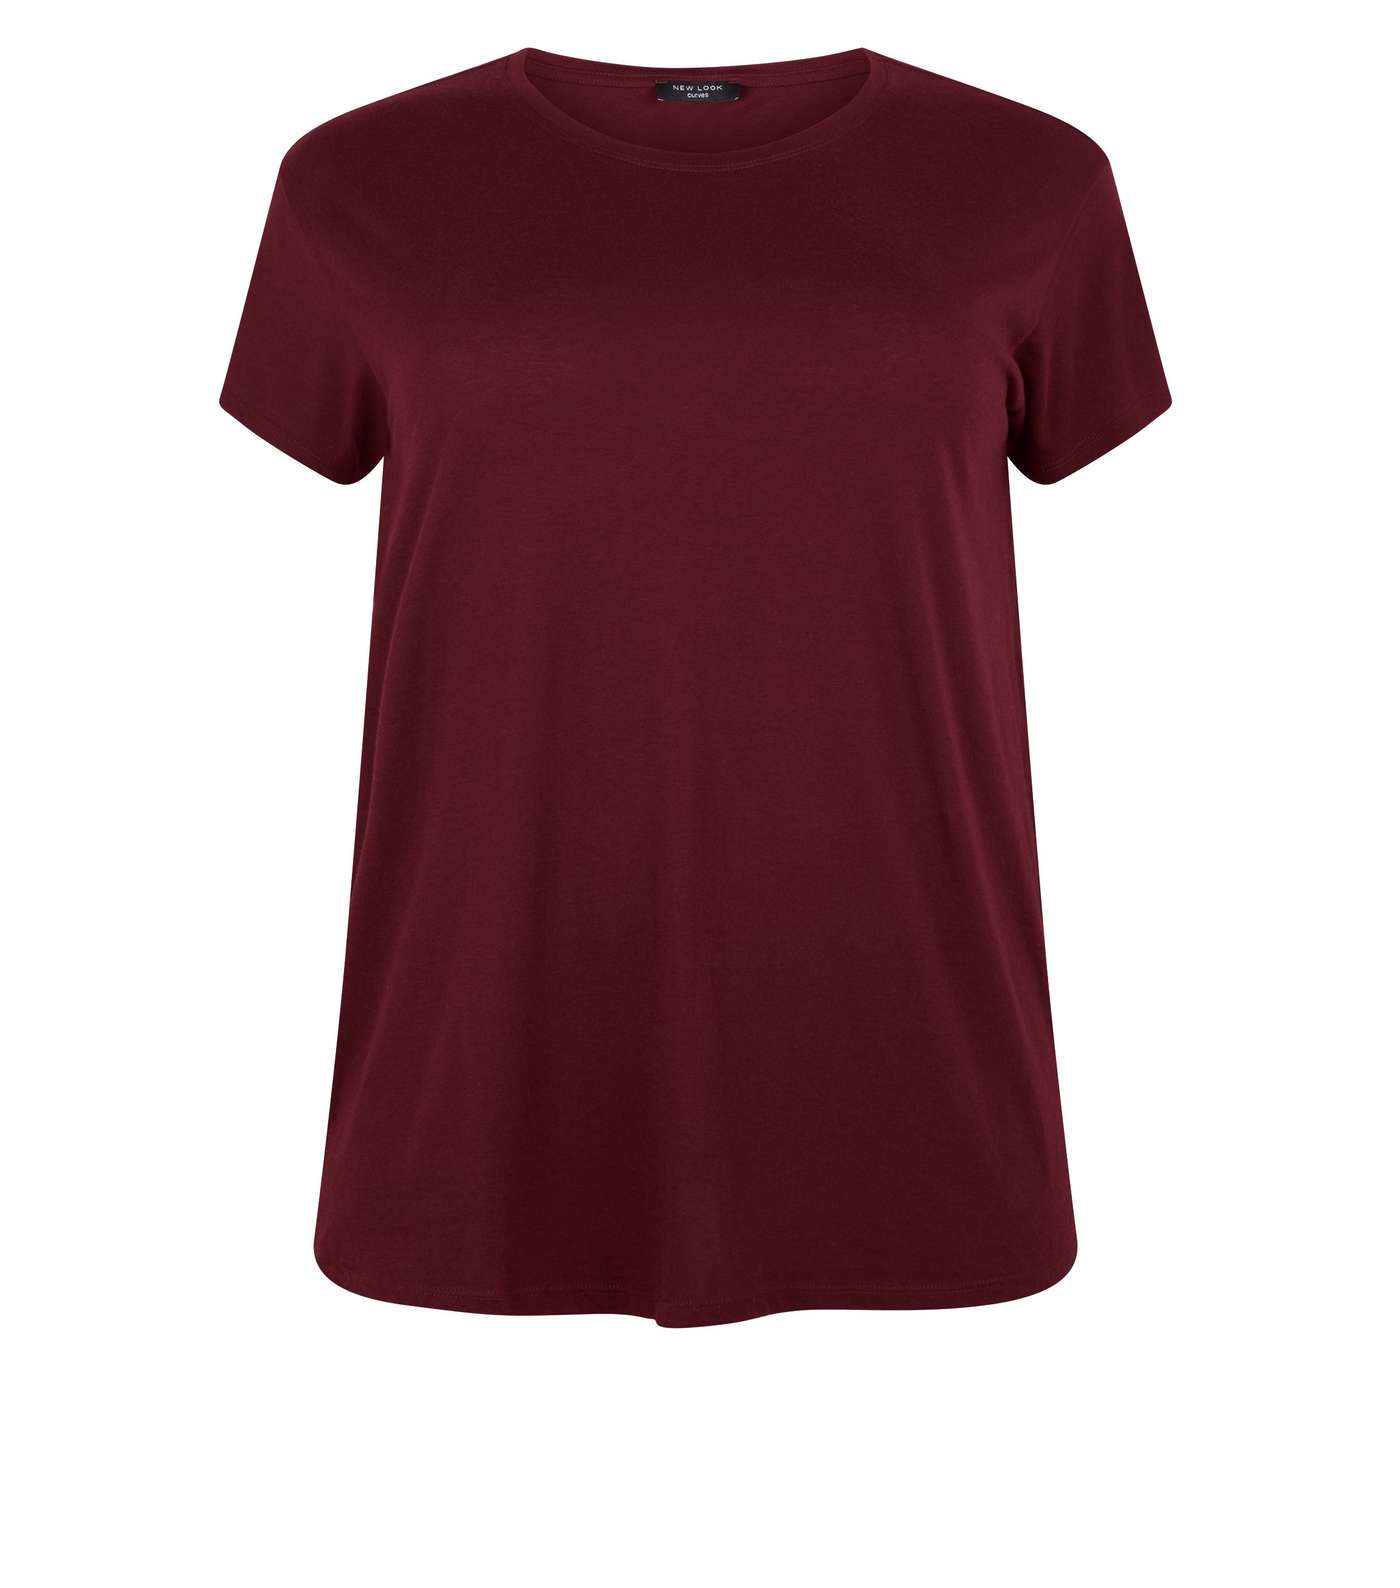 Curves Burgundy Cotton Blend T-Shirt Image 4